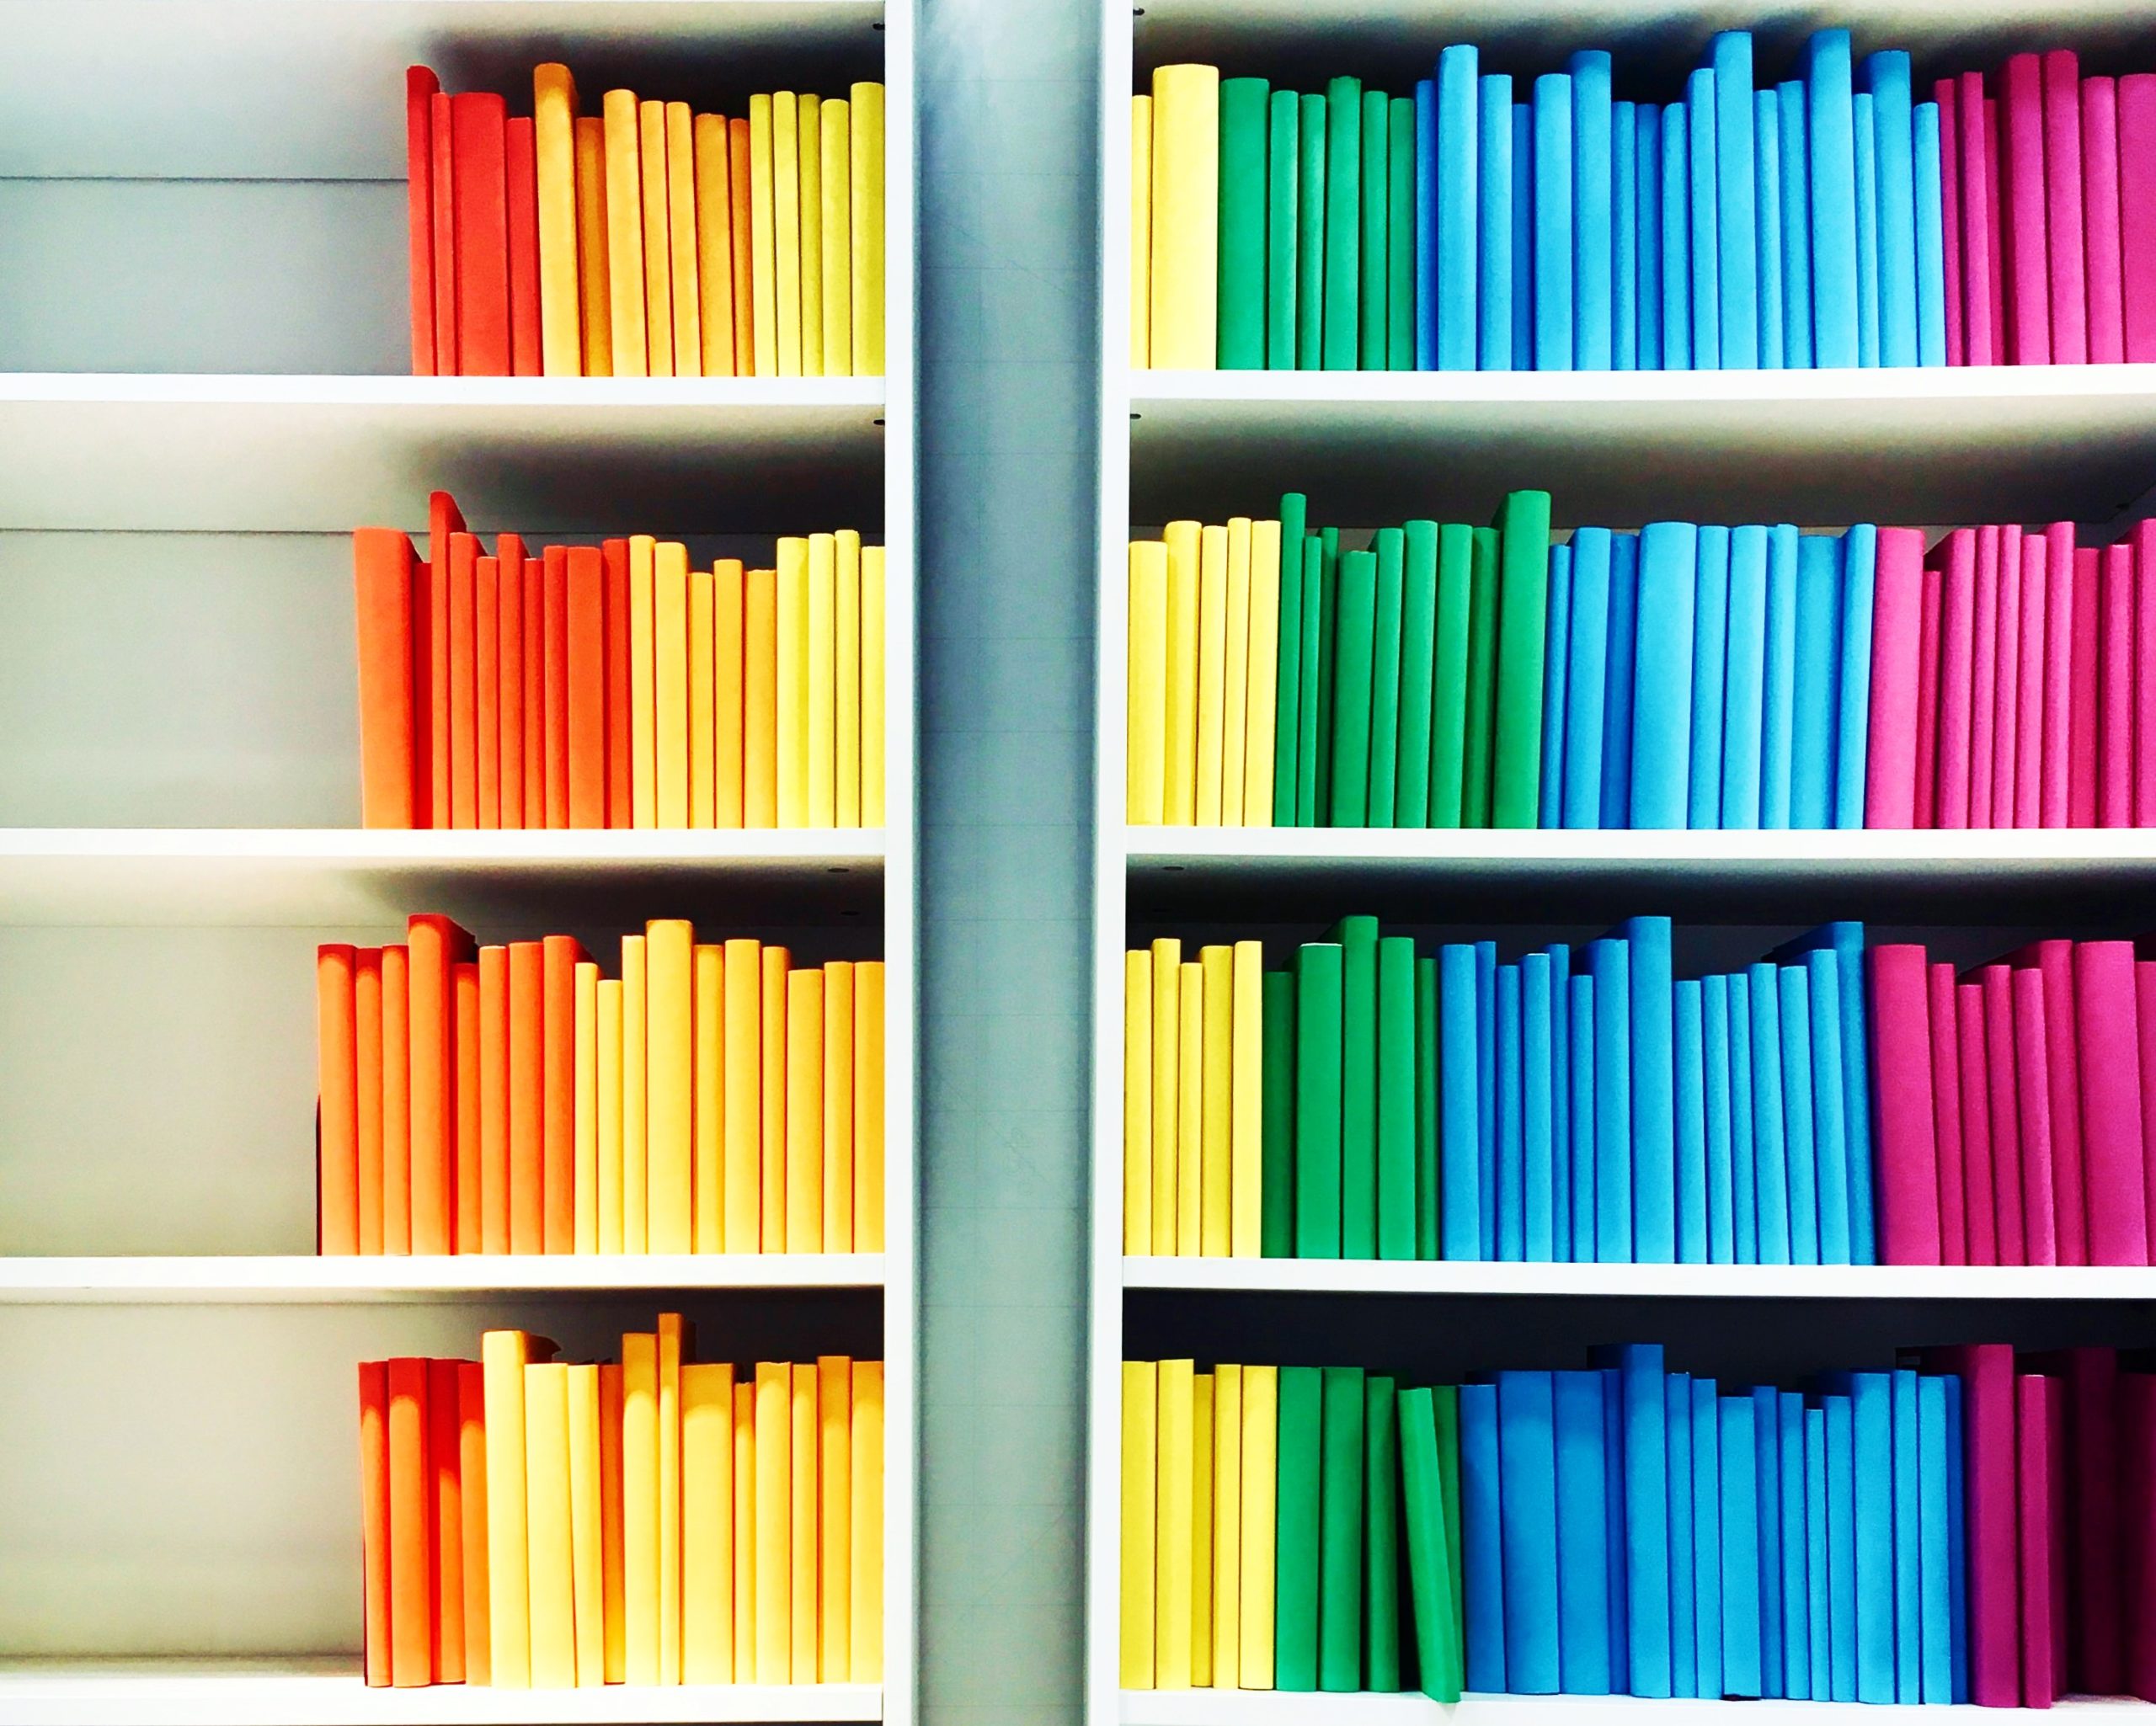 <img src="rainbow.jpg" alt="rainbow books on white shelf"/> 